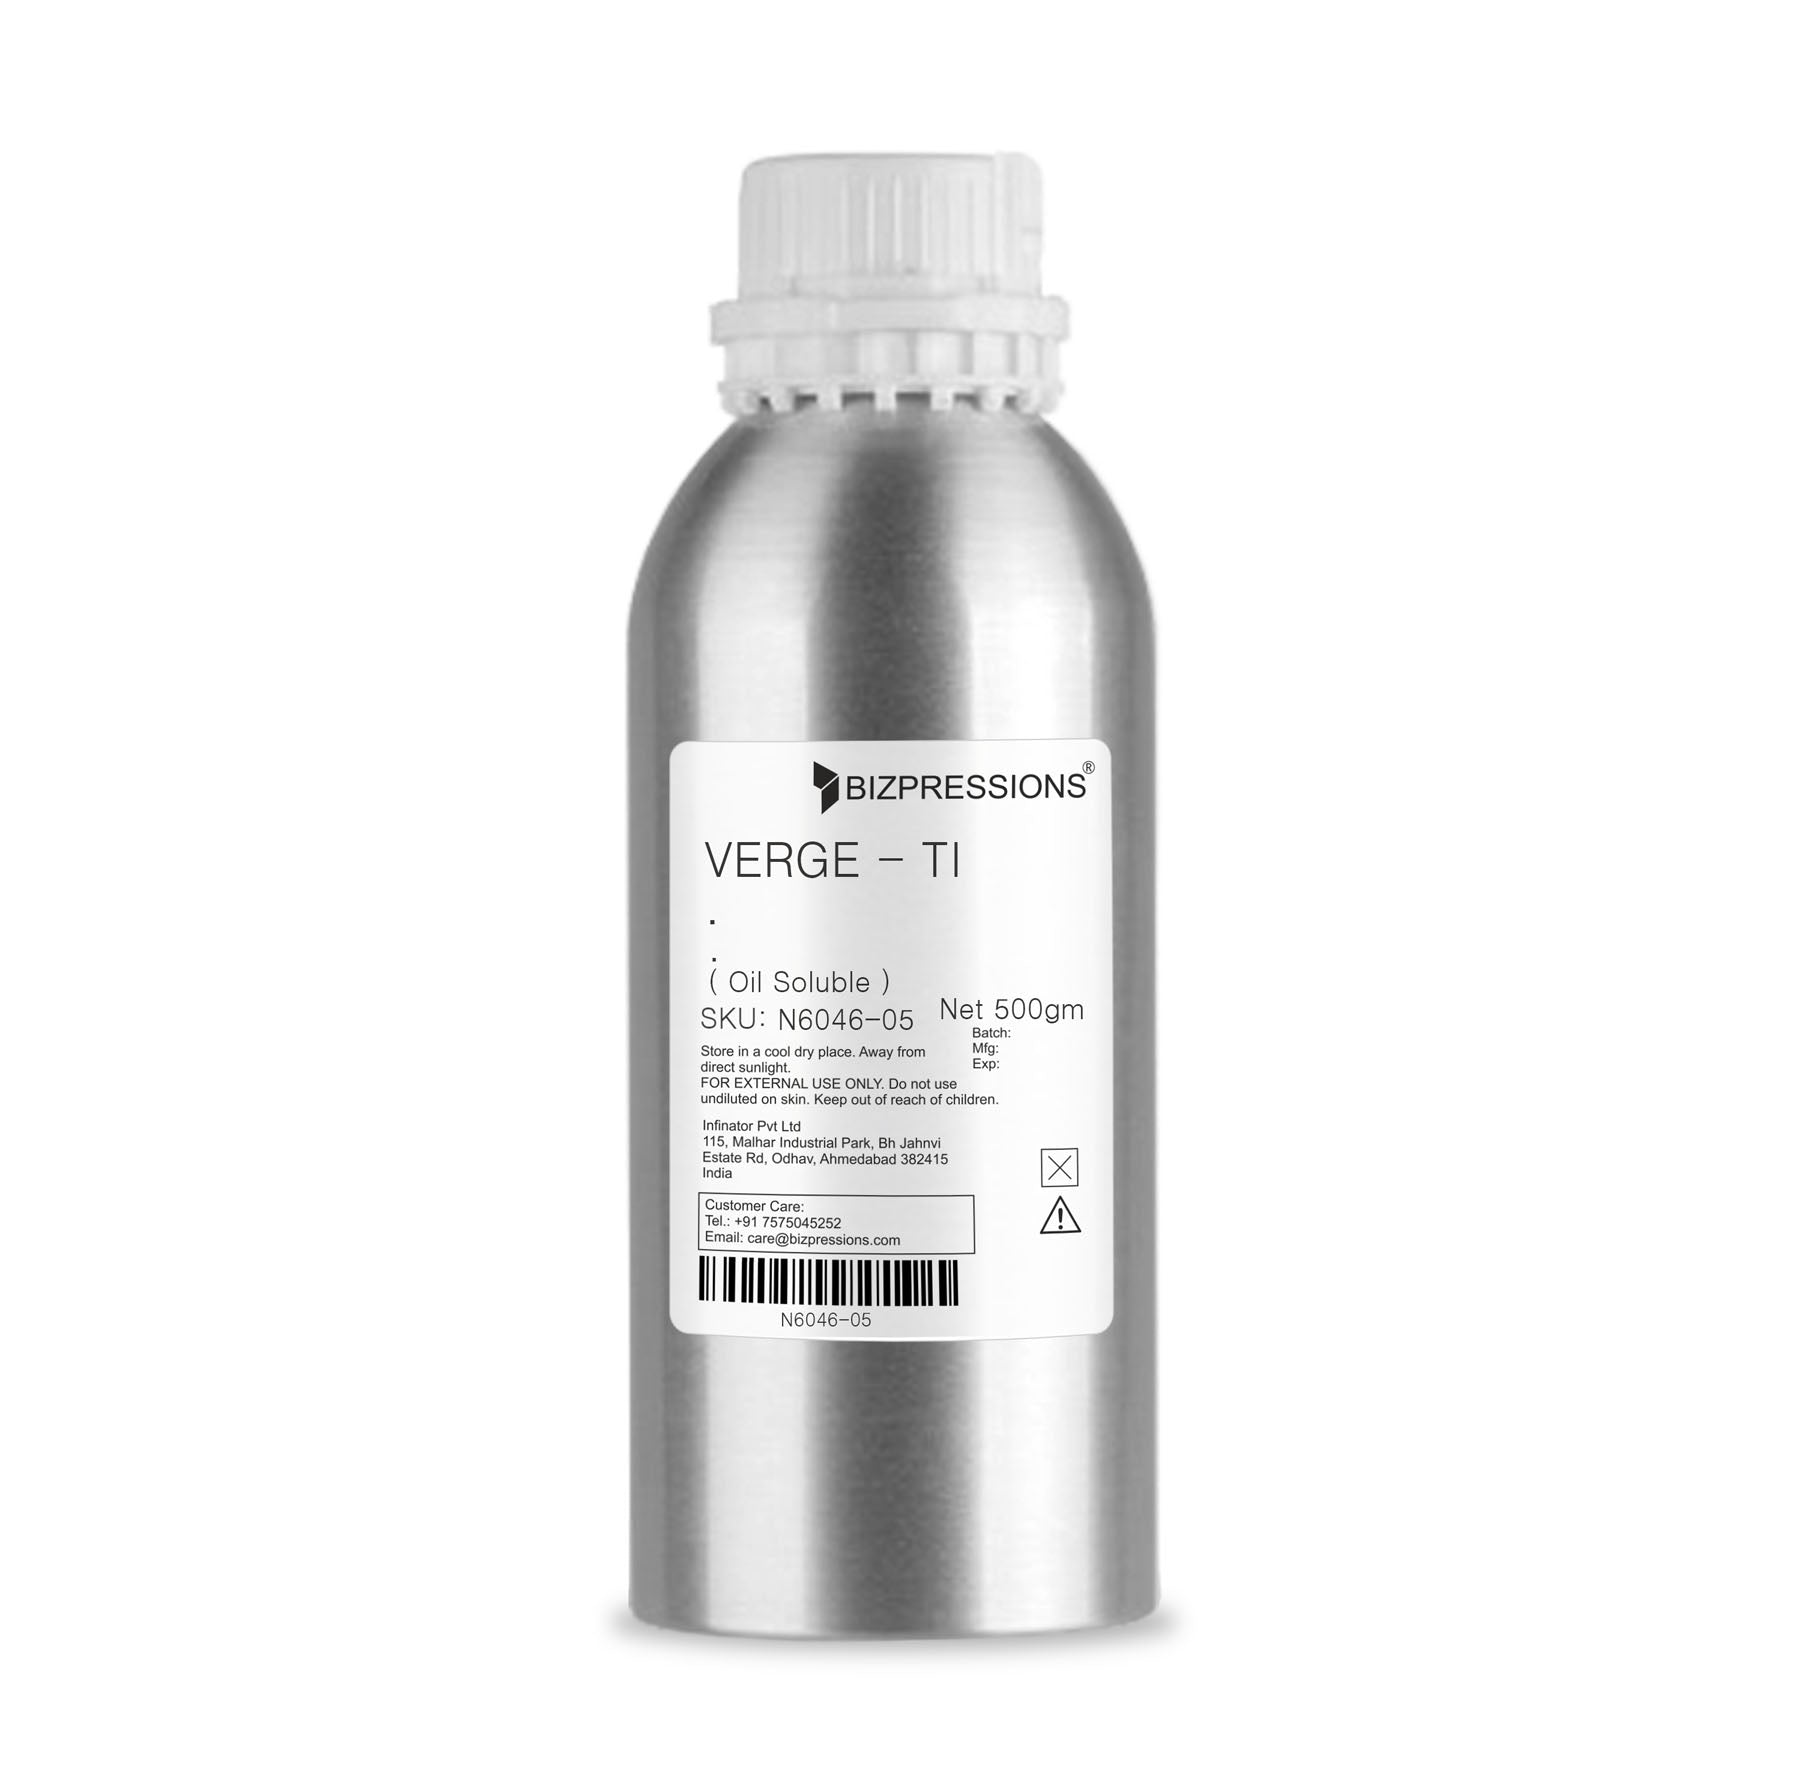 VERGE - TI - Fragrance ( Oil Soluble ) - 500 gm